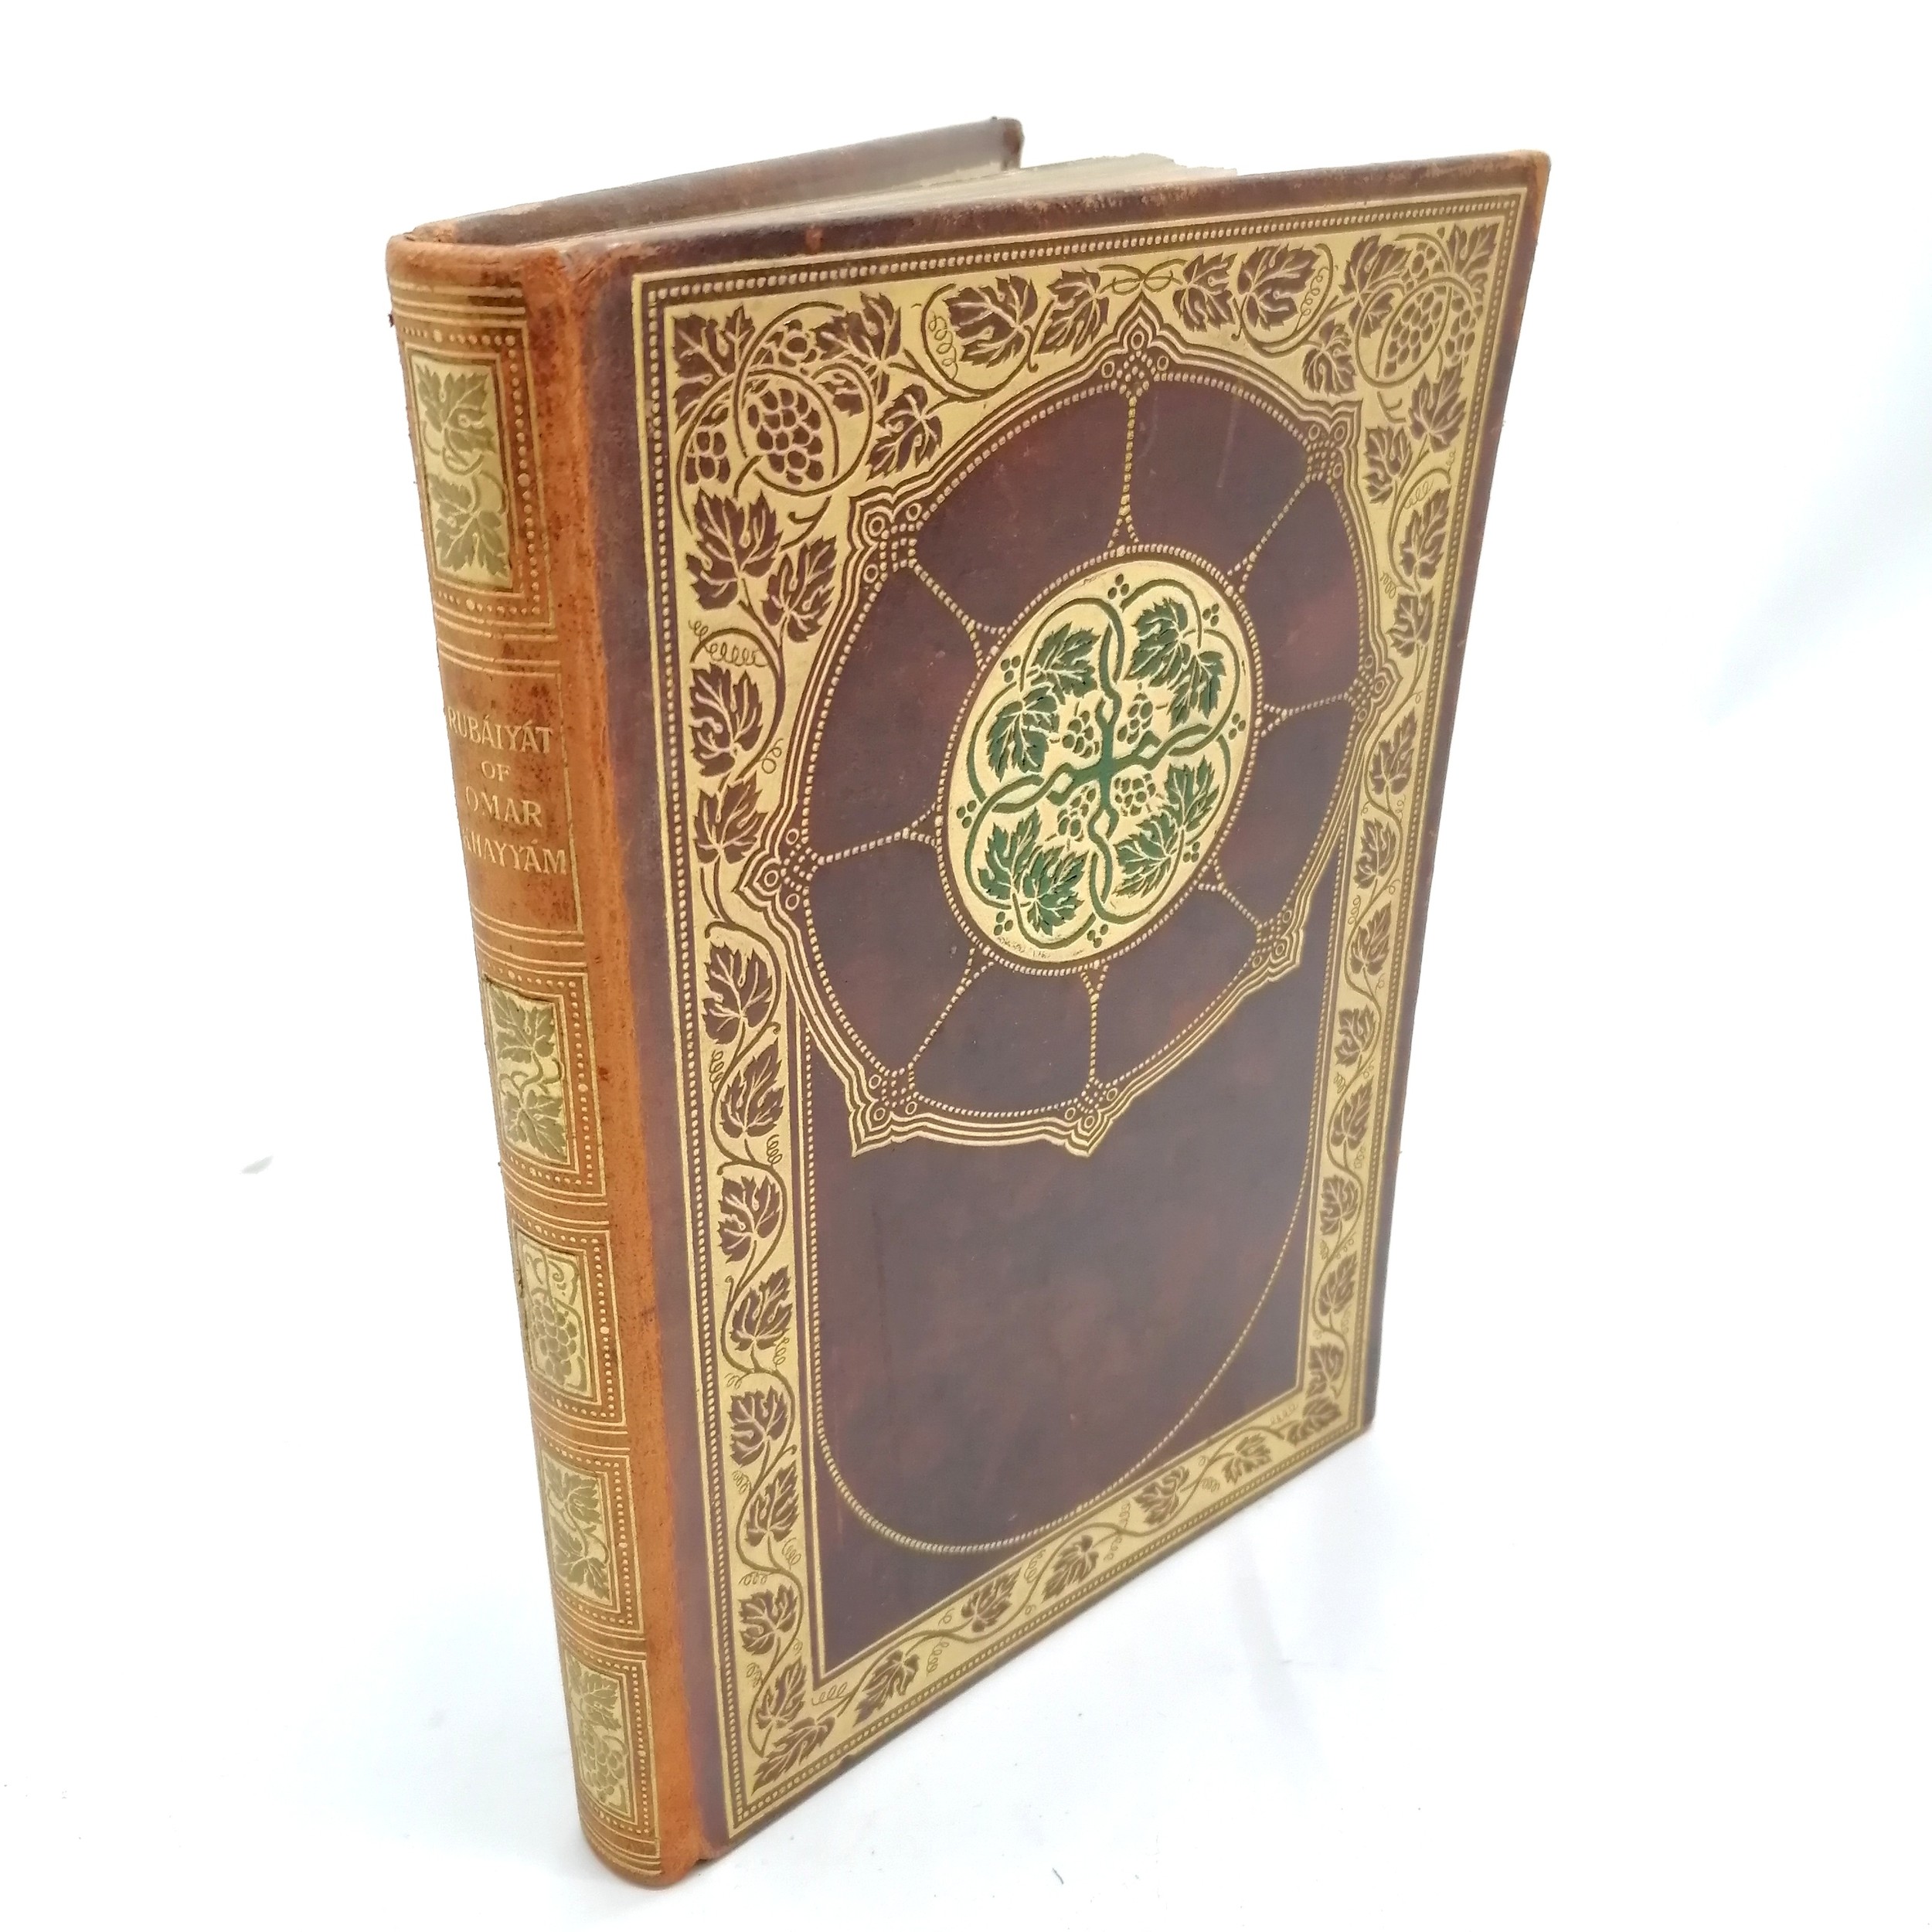 (1909+) Rubaiyat of Omar Khayyam (George Harrap) book with illustrations by William 'Willy' Andrew